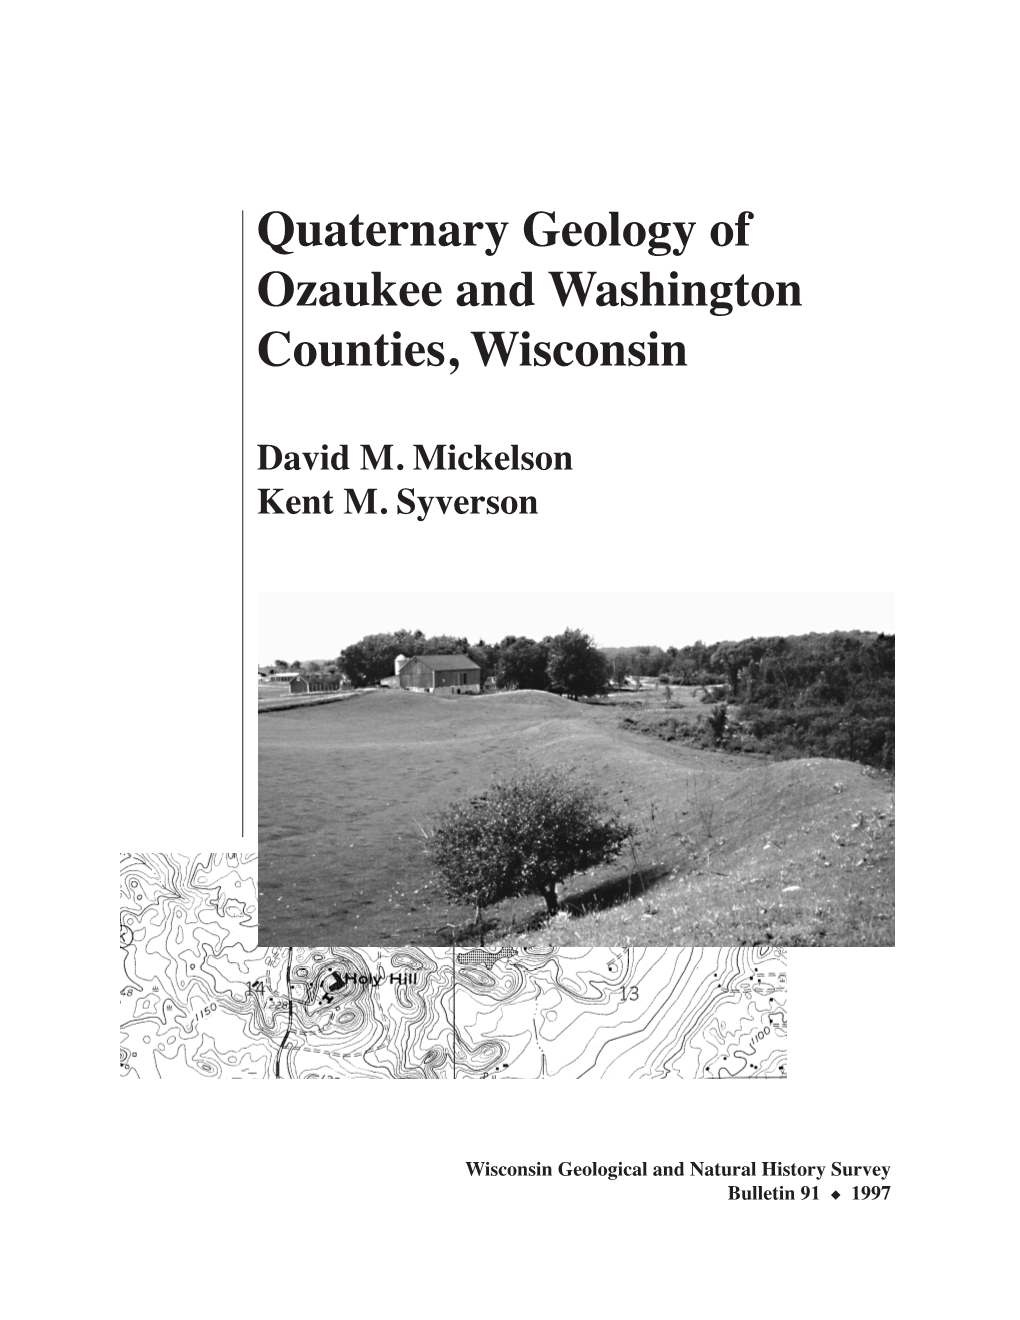 Quaternary Geology of Ozaukee and Washington Counties, Wisconsin